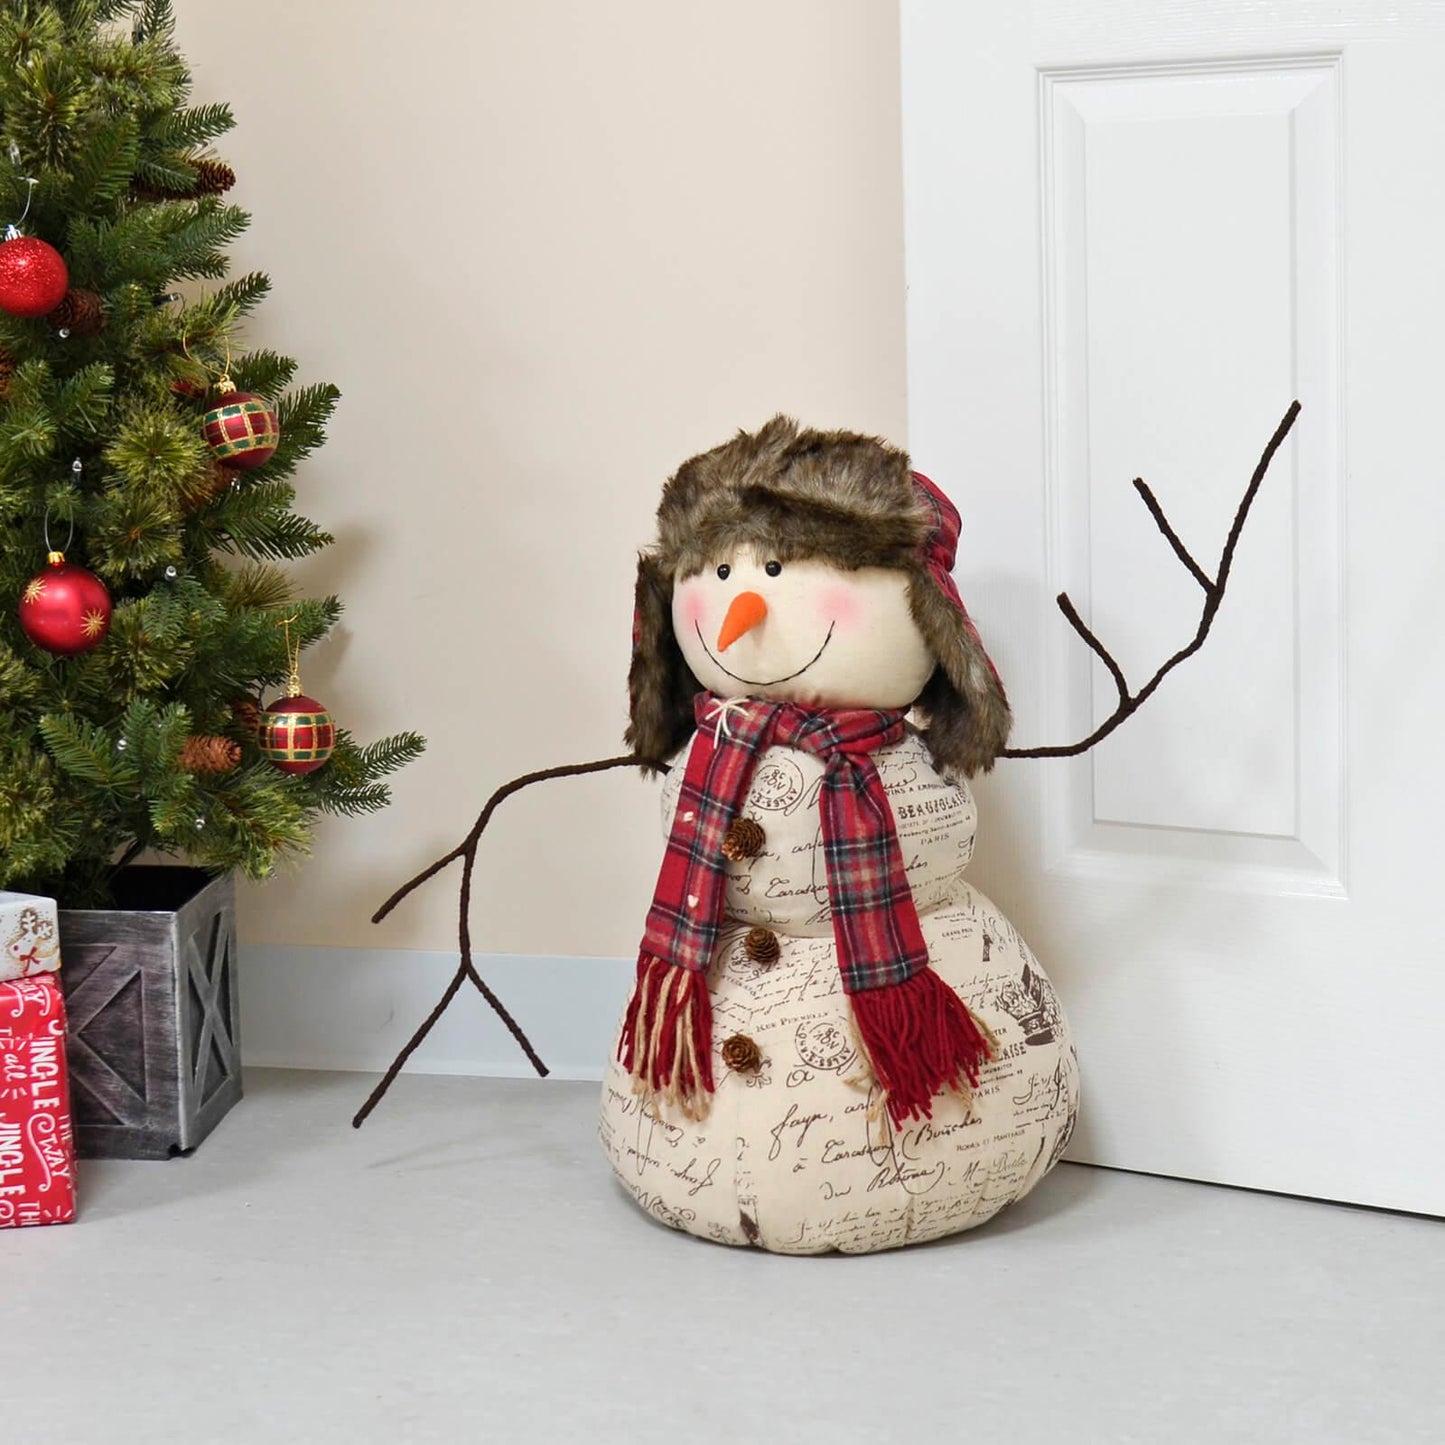 Mr Crimbo 26" Snowman Figure Plush Christmas Decoration - MrCrimbo.co.uk -XS5143 - -christmas decor